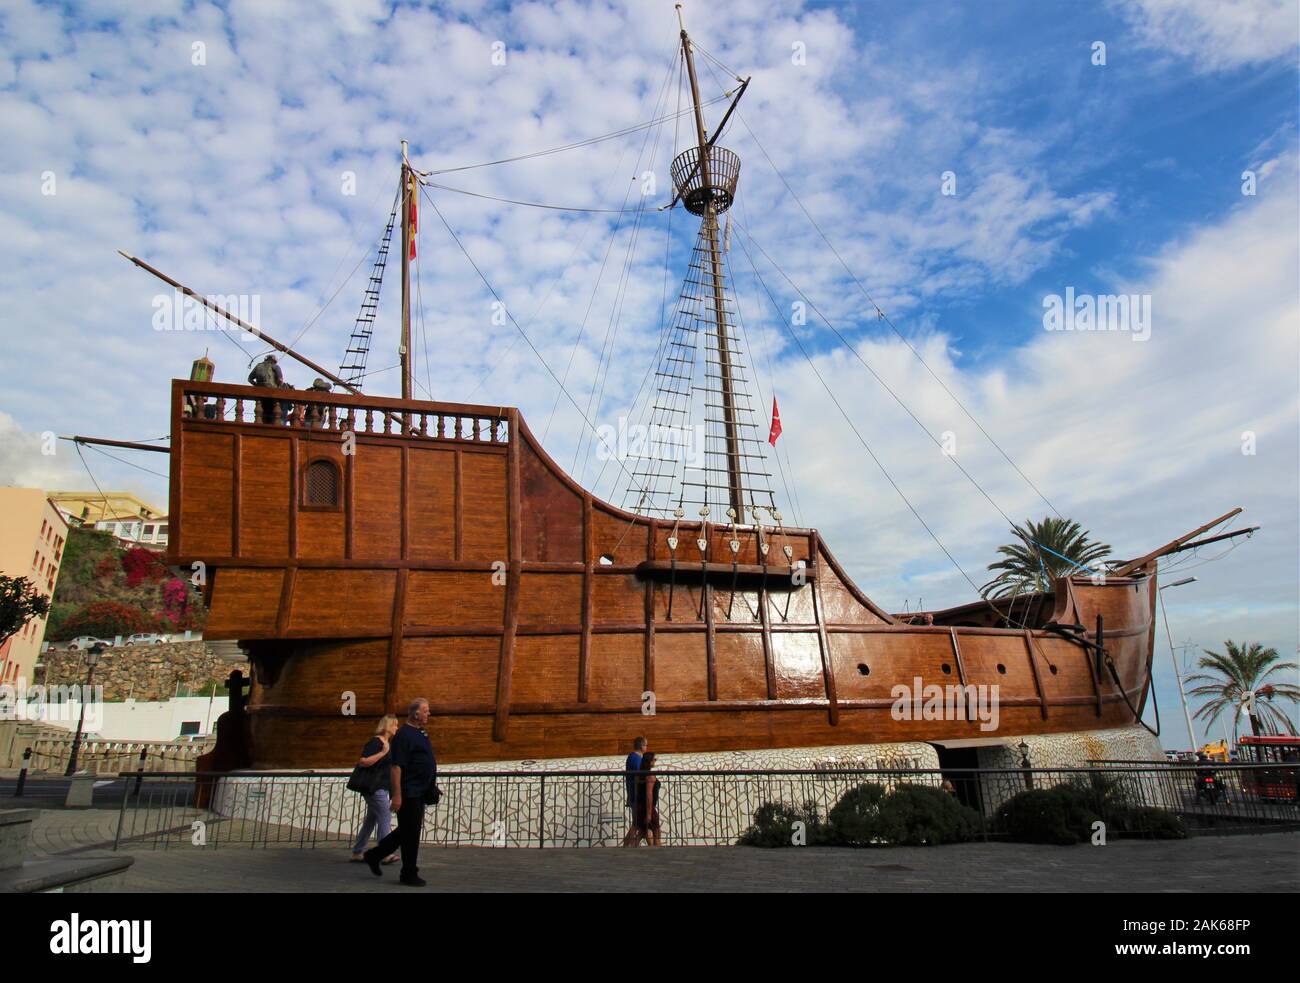 A replica of Christopher Columbus's ship Santa Maria, that houses the Barco de la Virgen naval museum in  Santa Cruz, La Palma, Canary Islands. Stock Photo